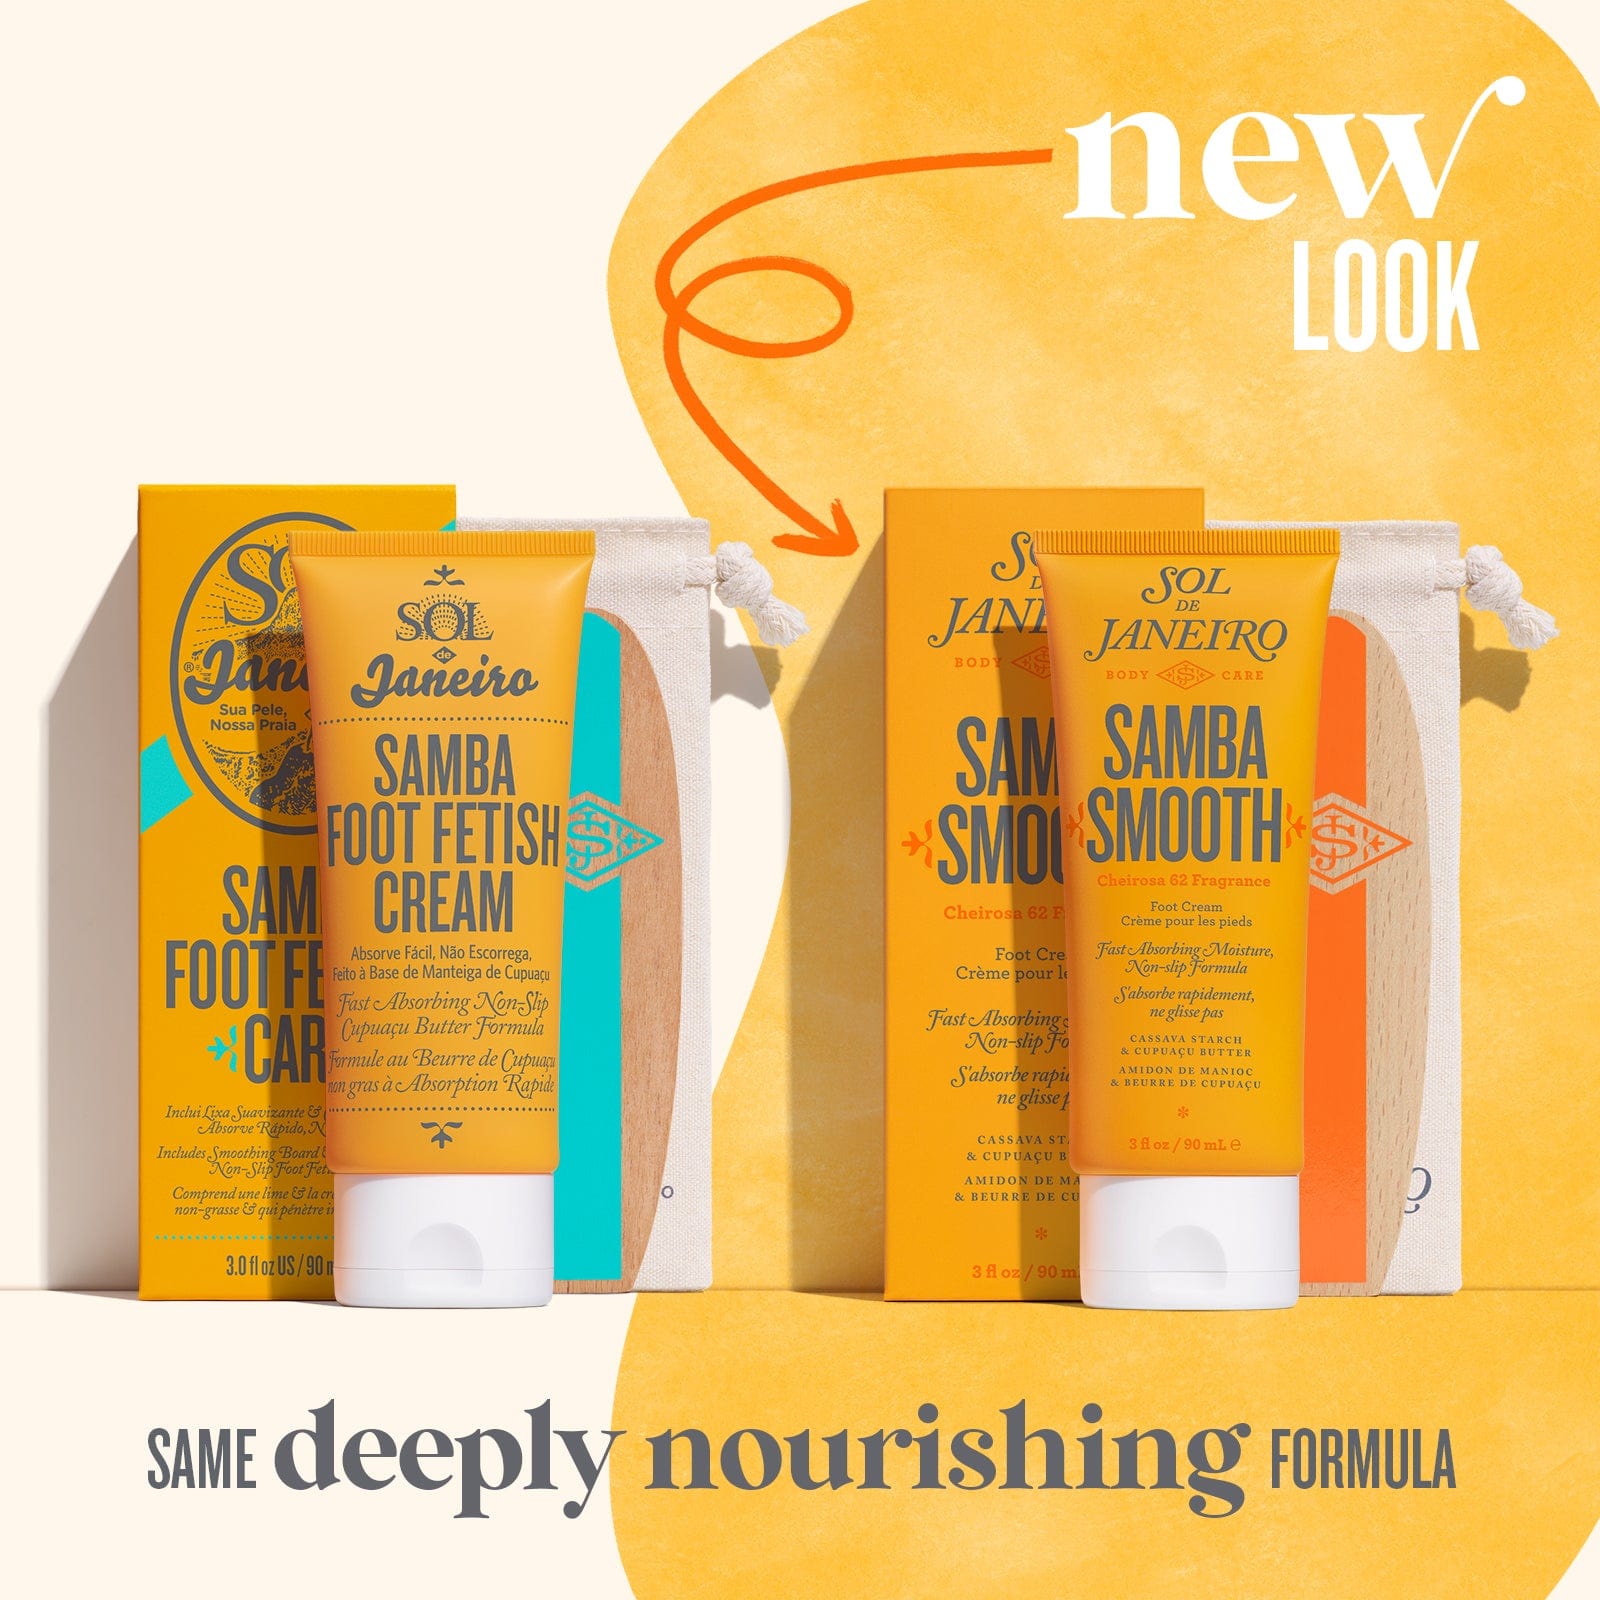 New Look - same deeply nourishing formula